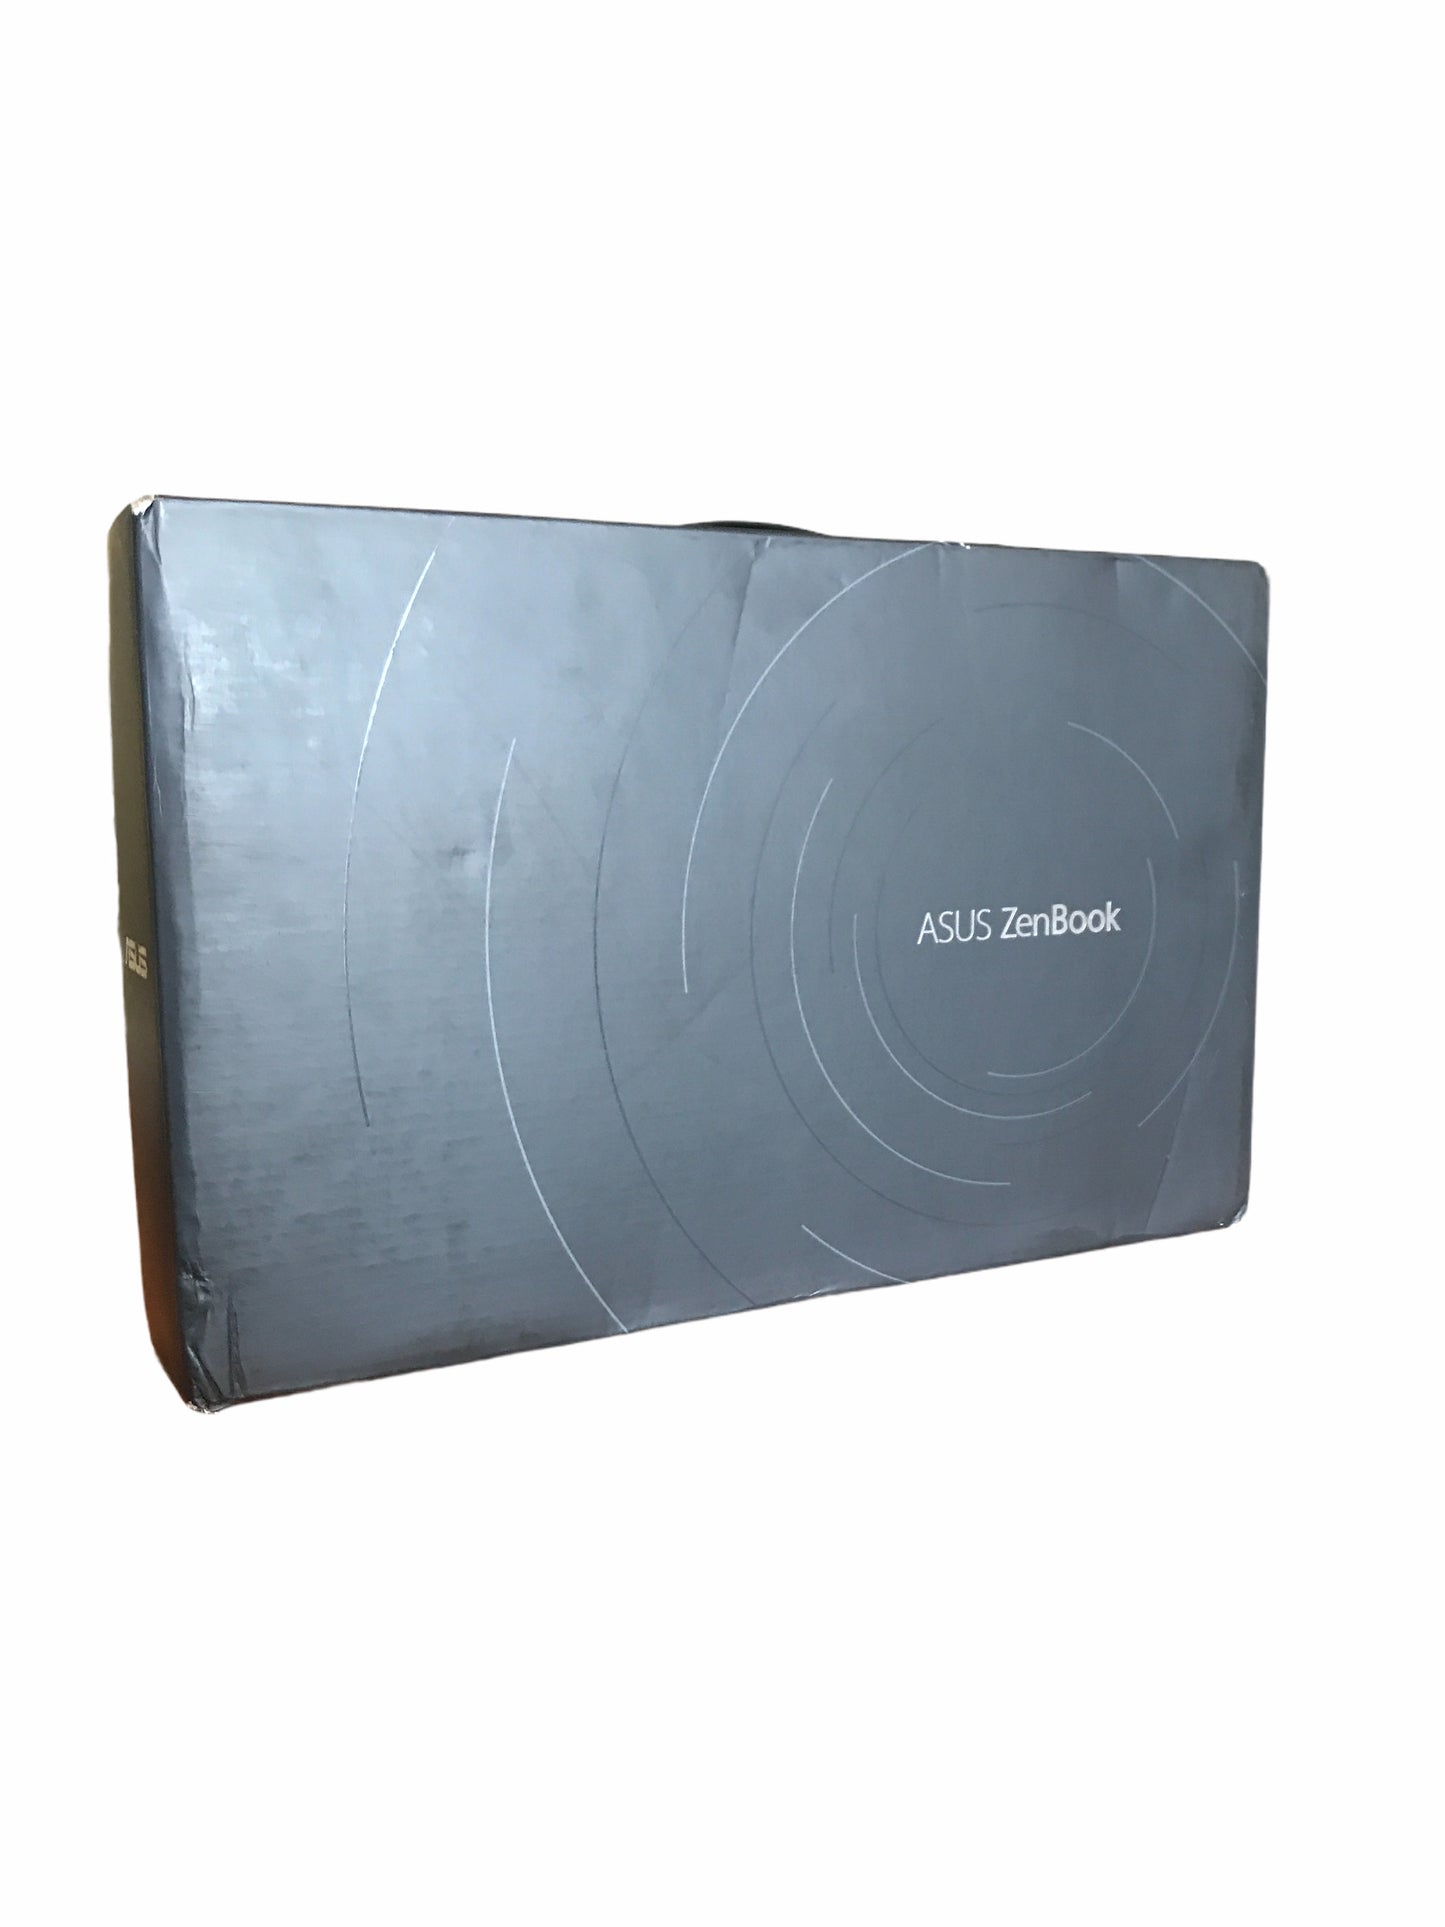 ASUS ZenBook 14" Ultra Slim Intel i7 -1165G7 16GB, 1TB PCIe SSD, Win 10 Home